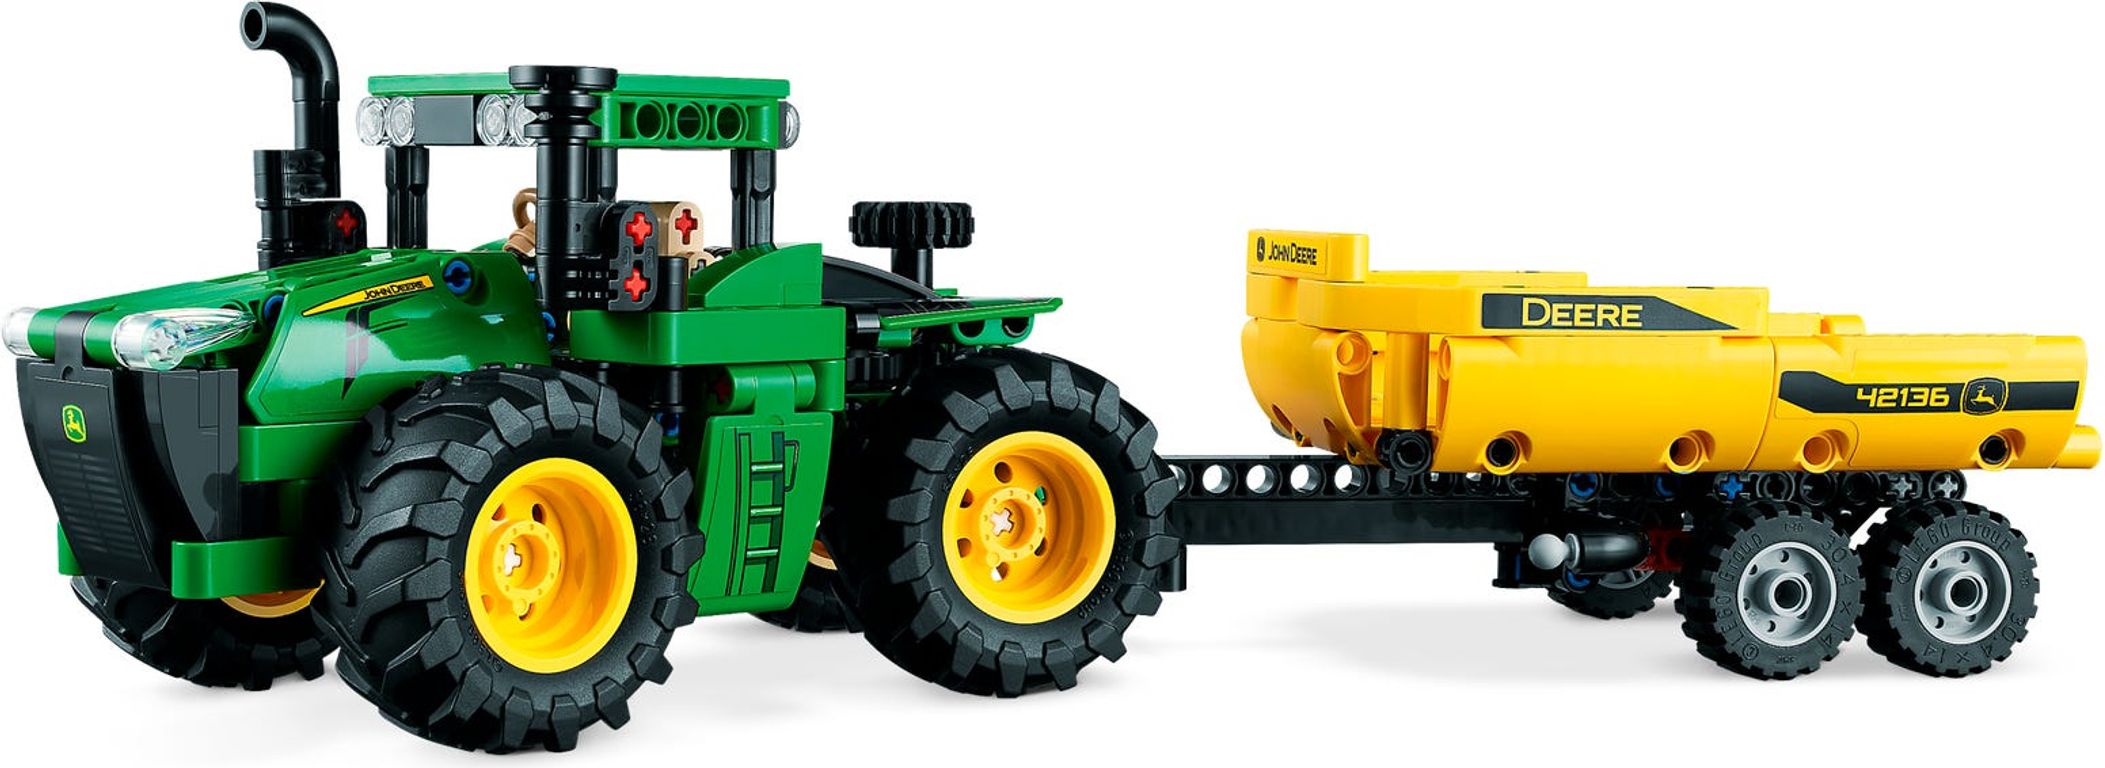 LEGO® Technic John Deere 9620R 4WD Tractor partes